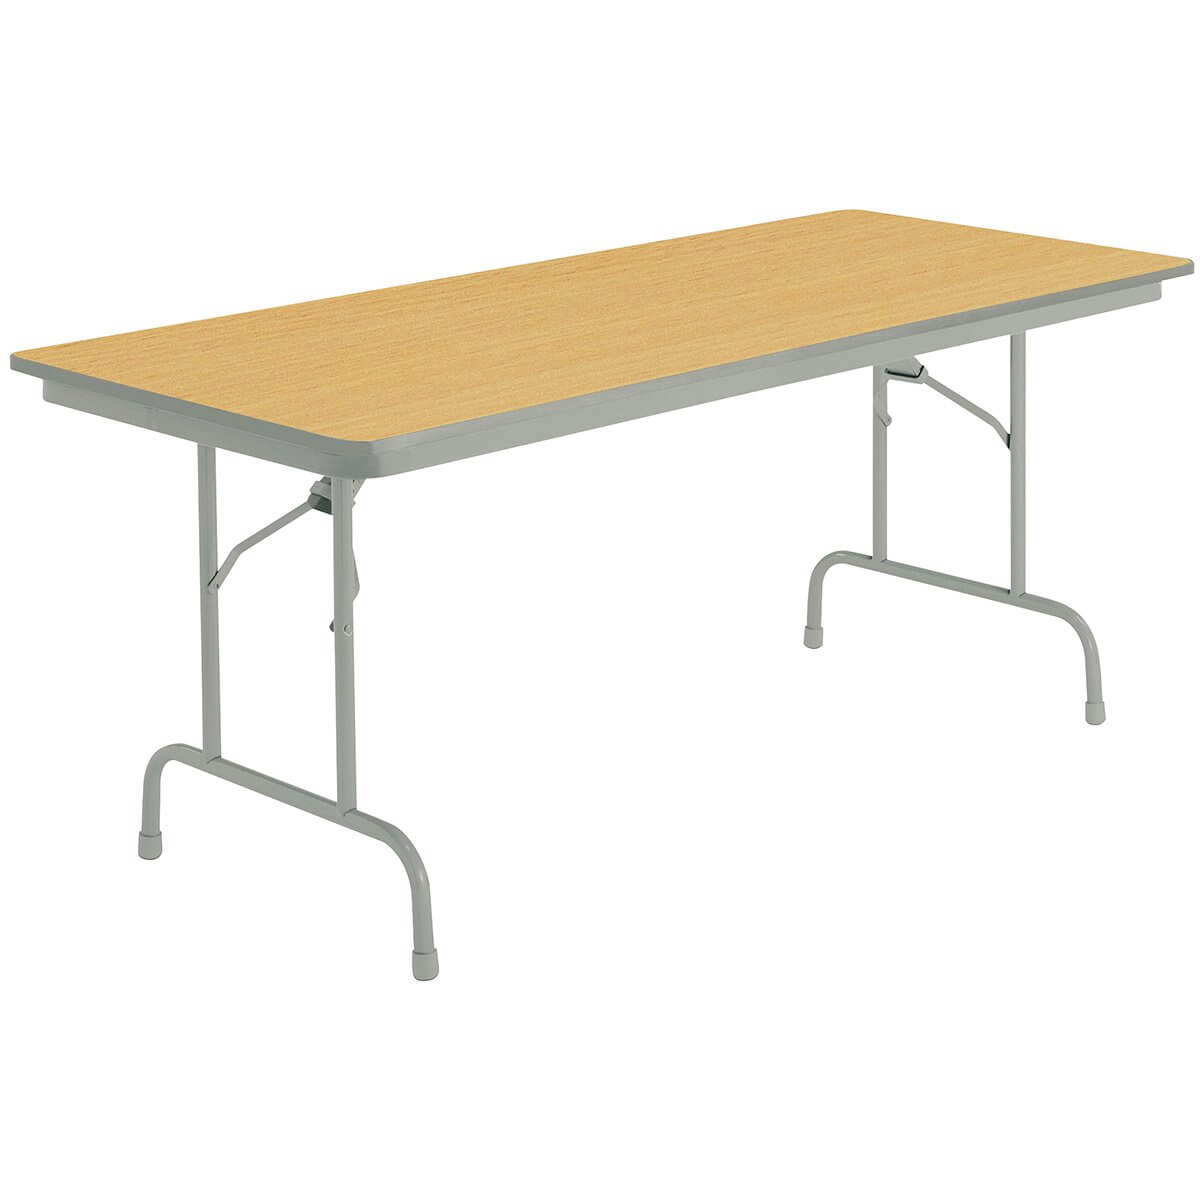 KI Folding Table Particleboard Core 36″X96″Plg